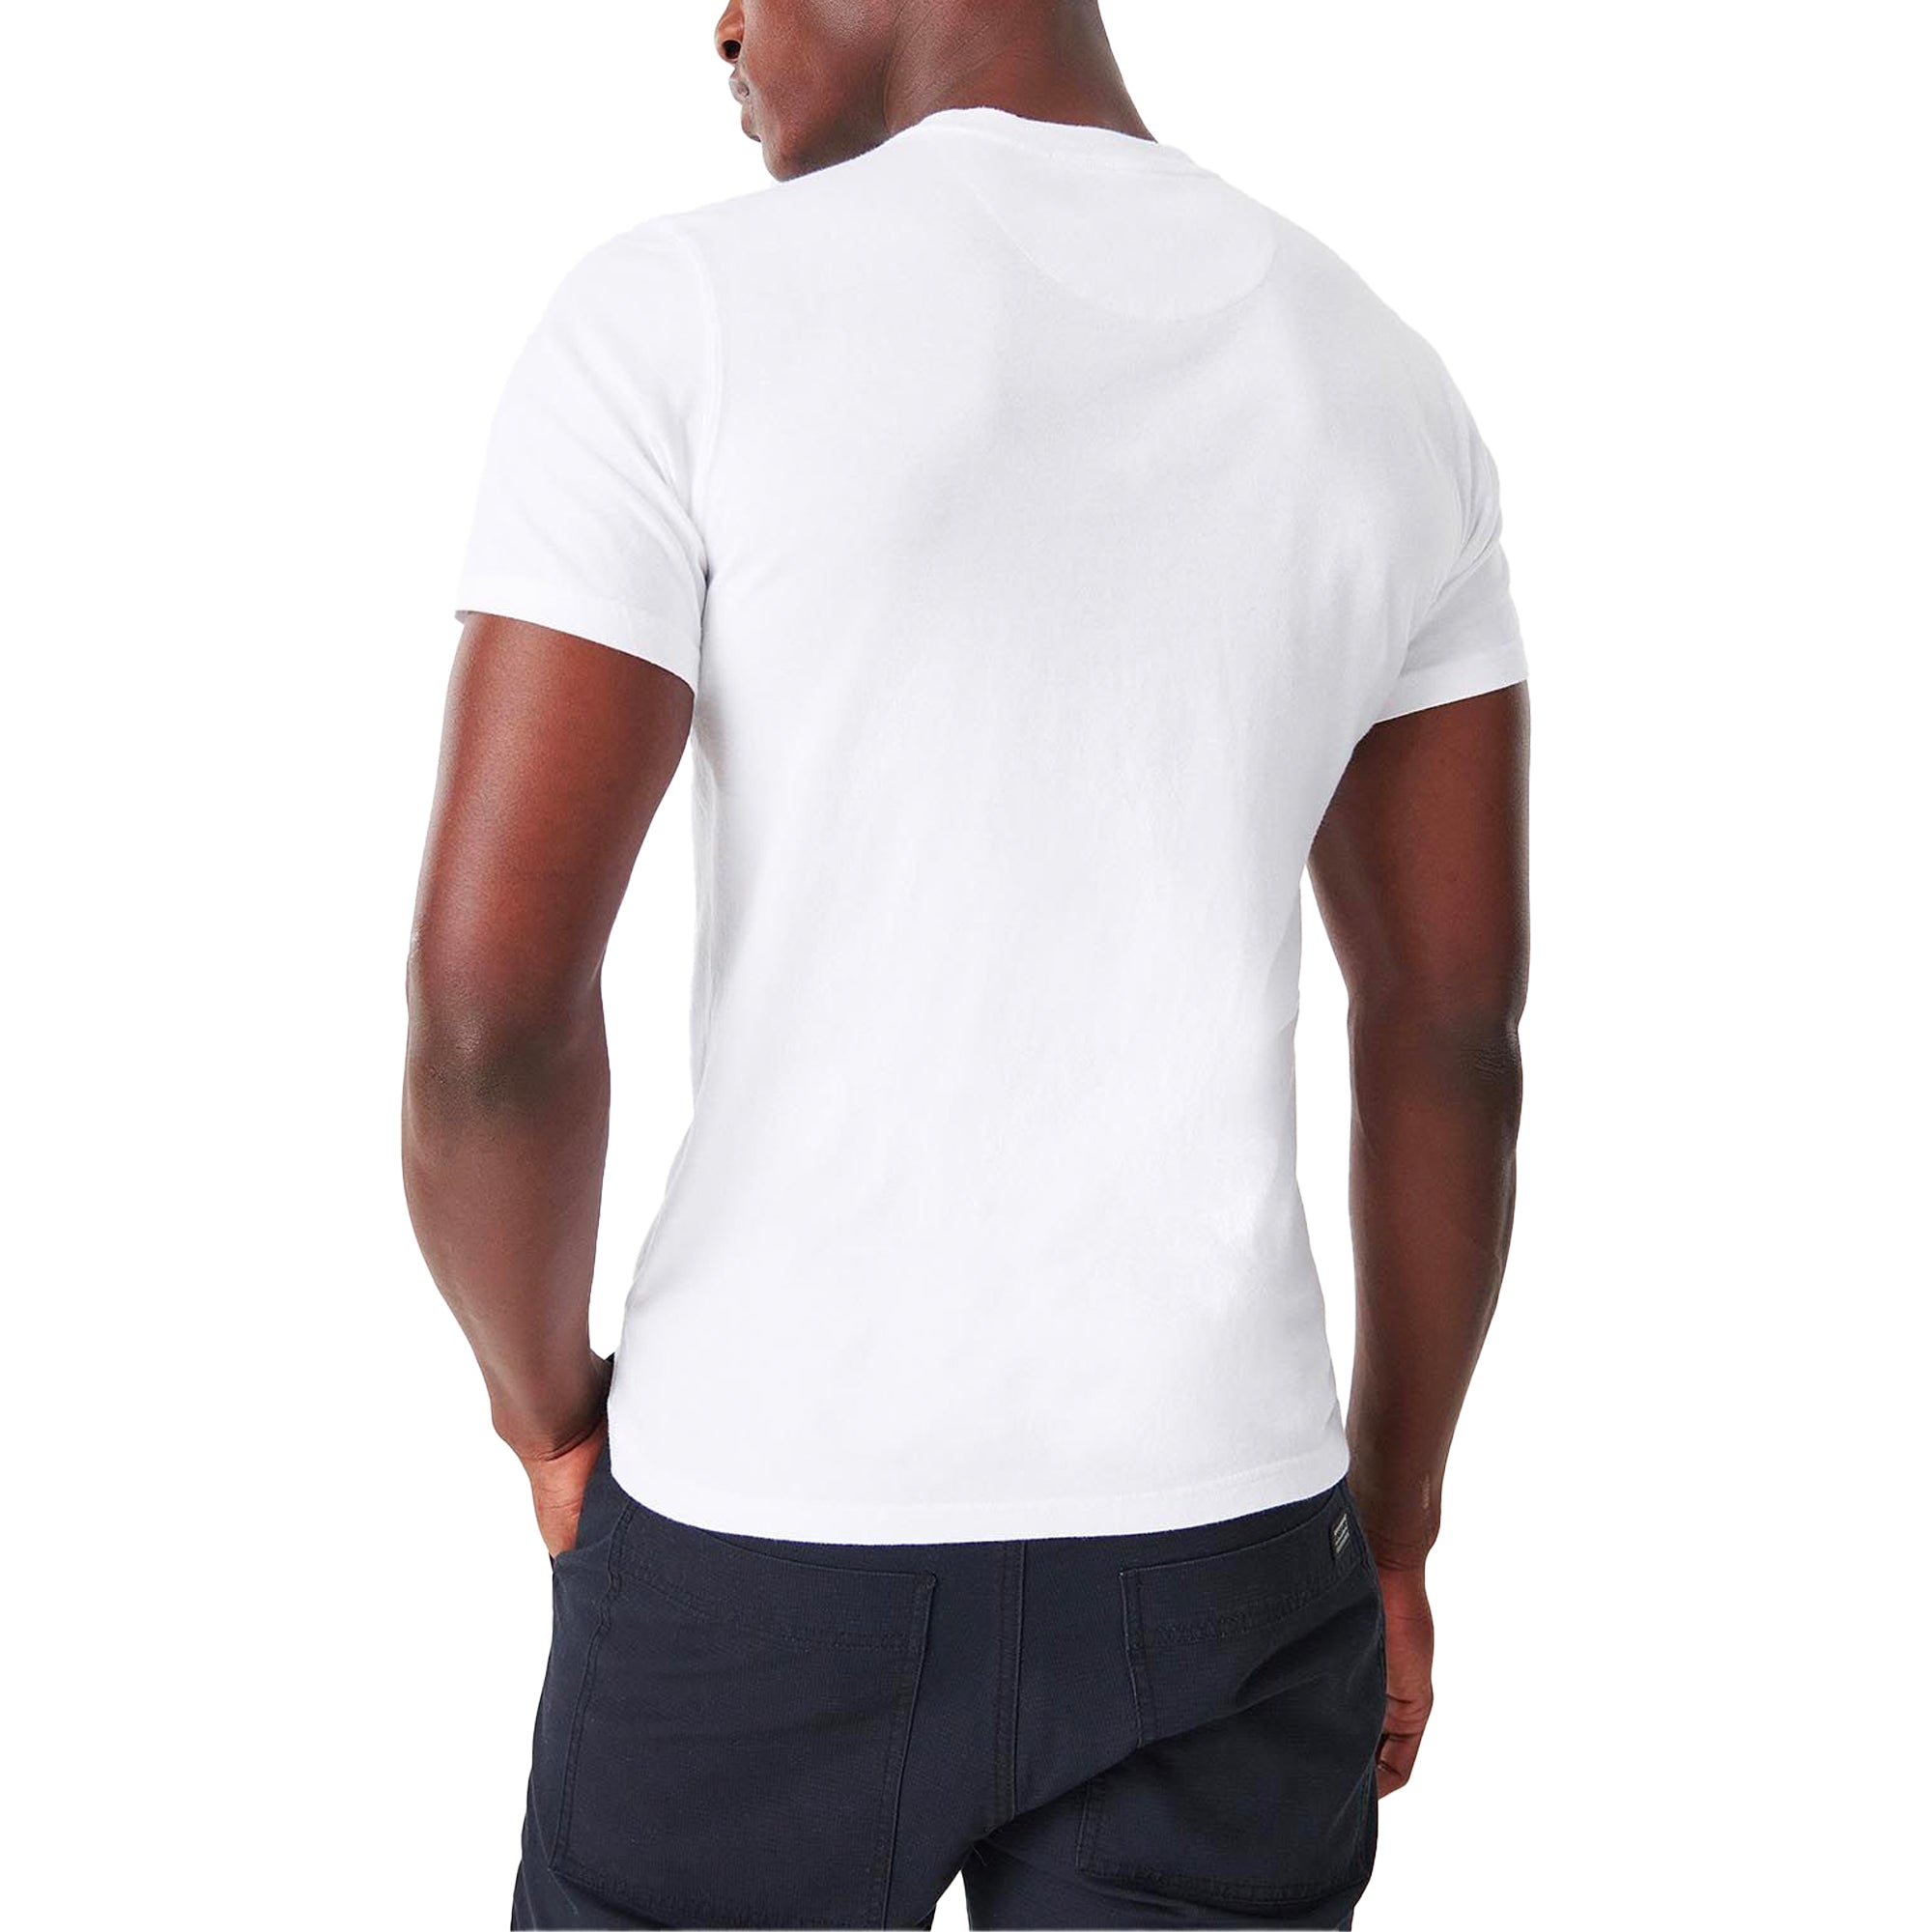 Barbour International Small Logo T-Shirt - White